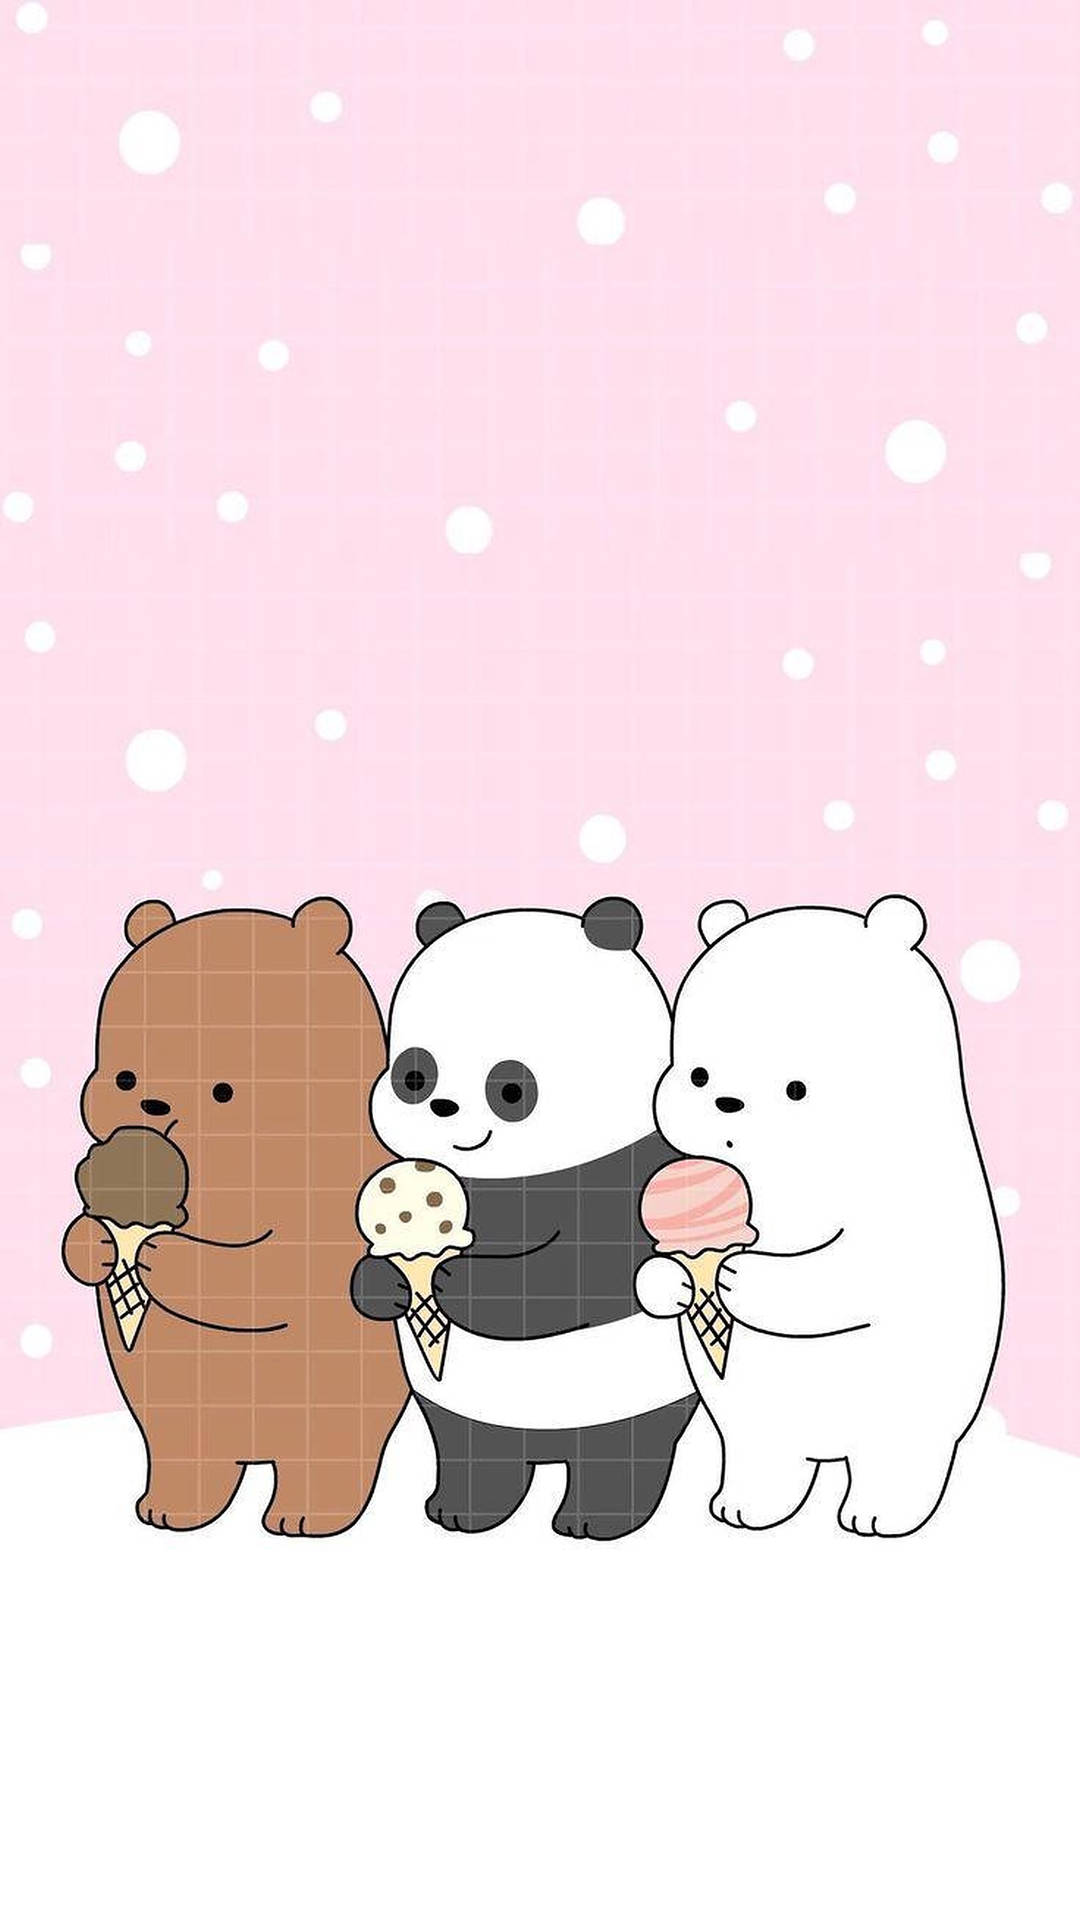 Three Cute Bears With Ice Cream